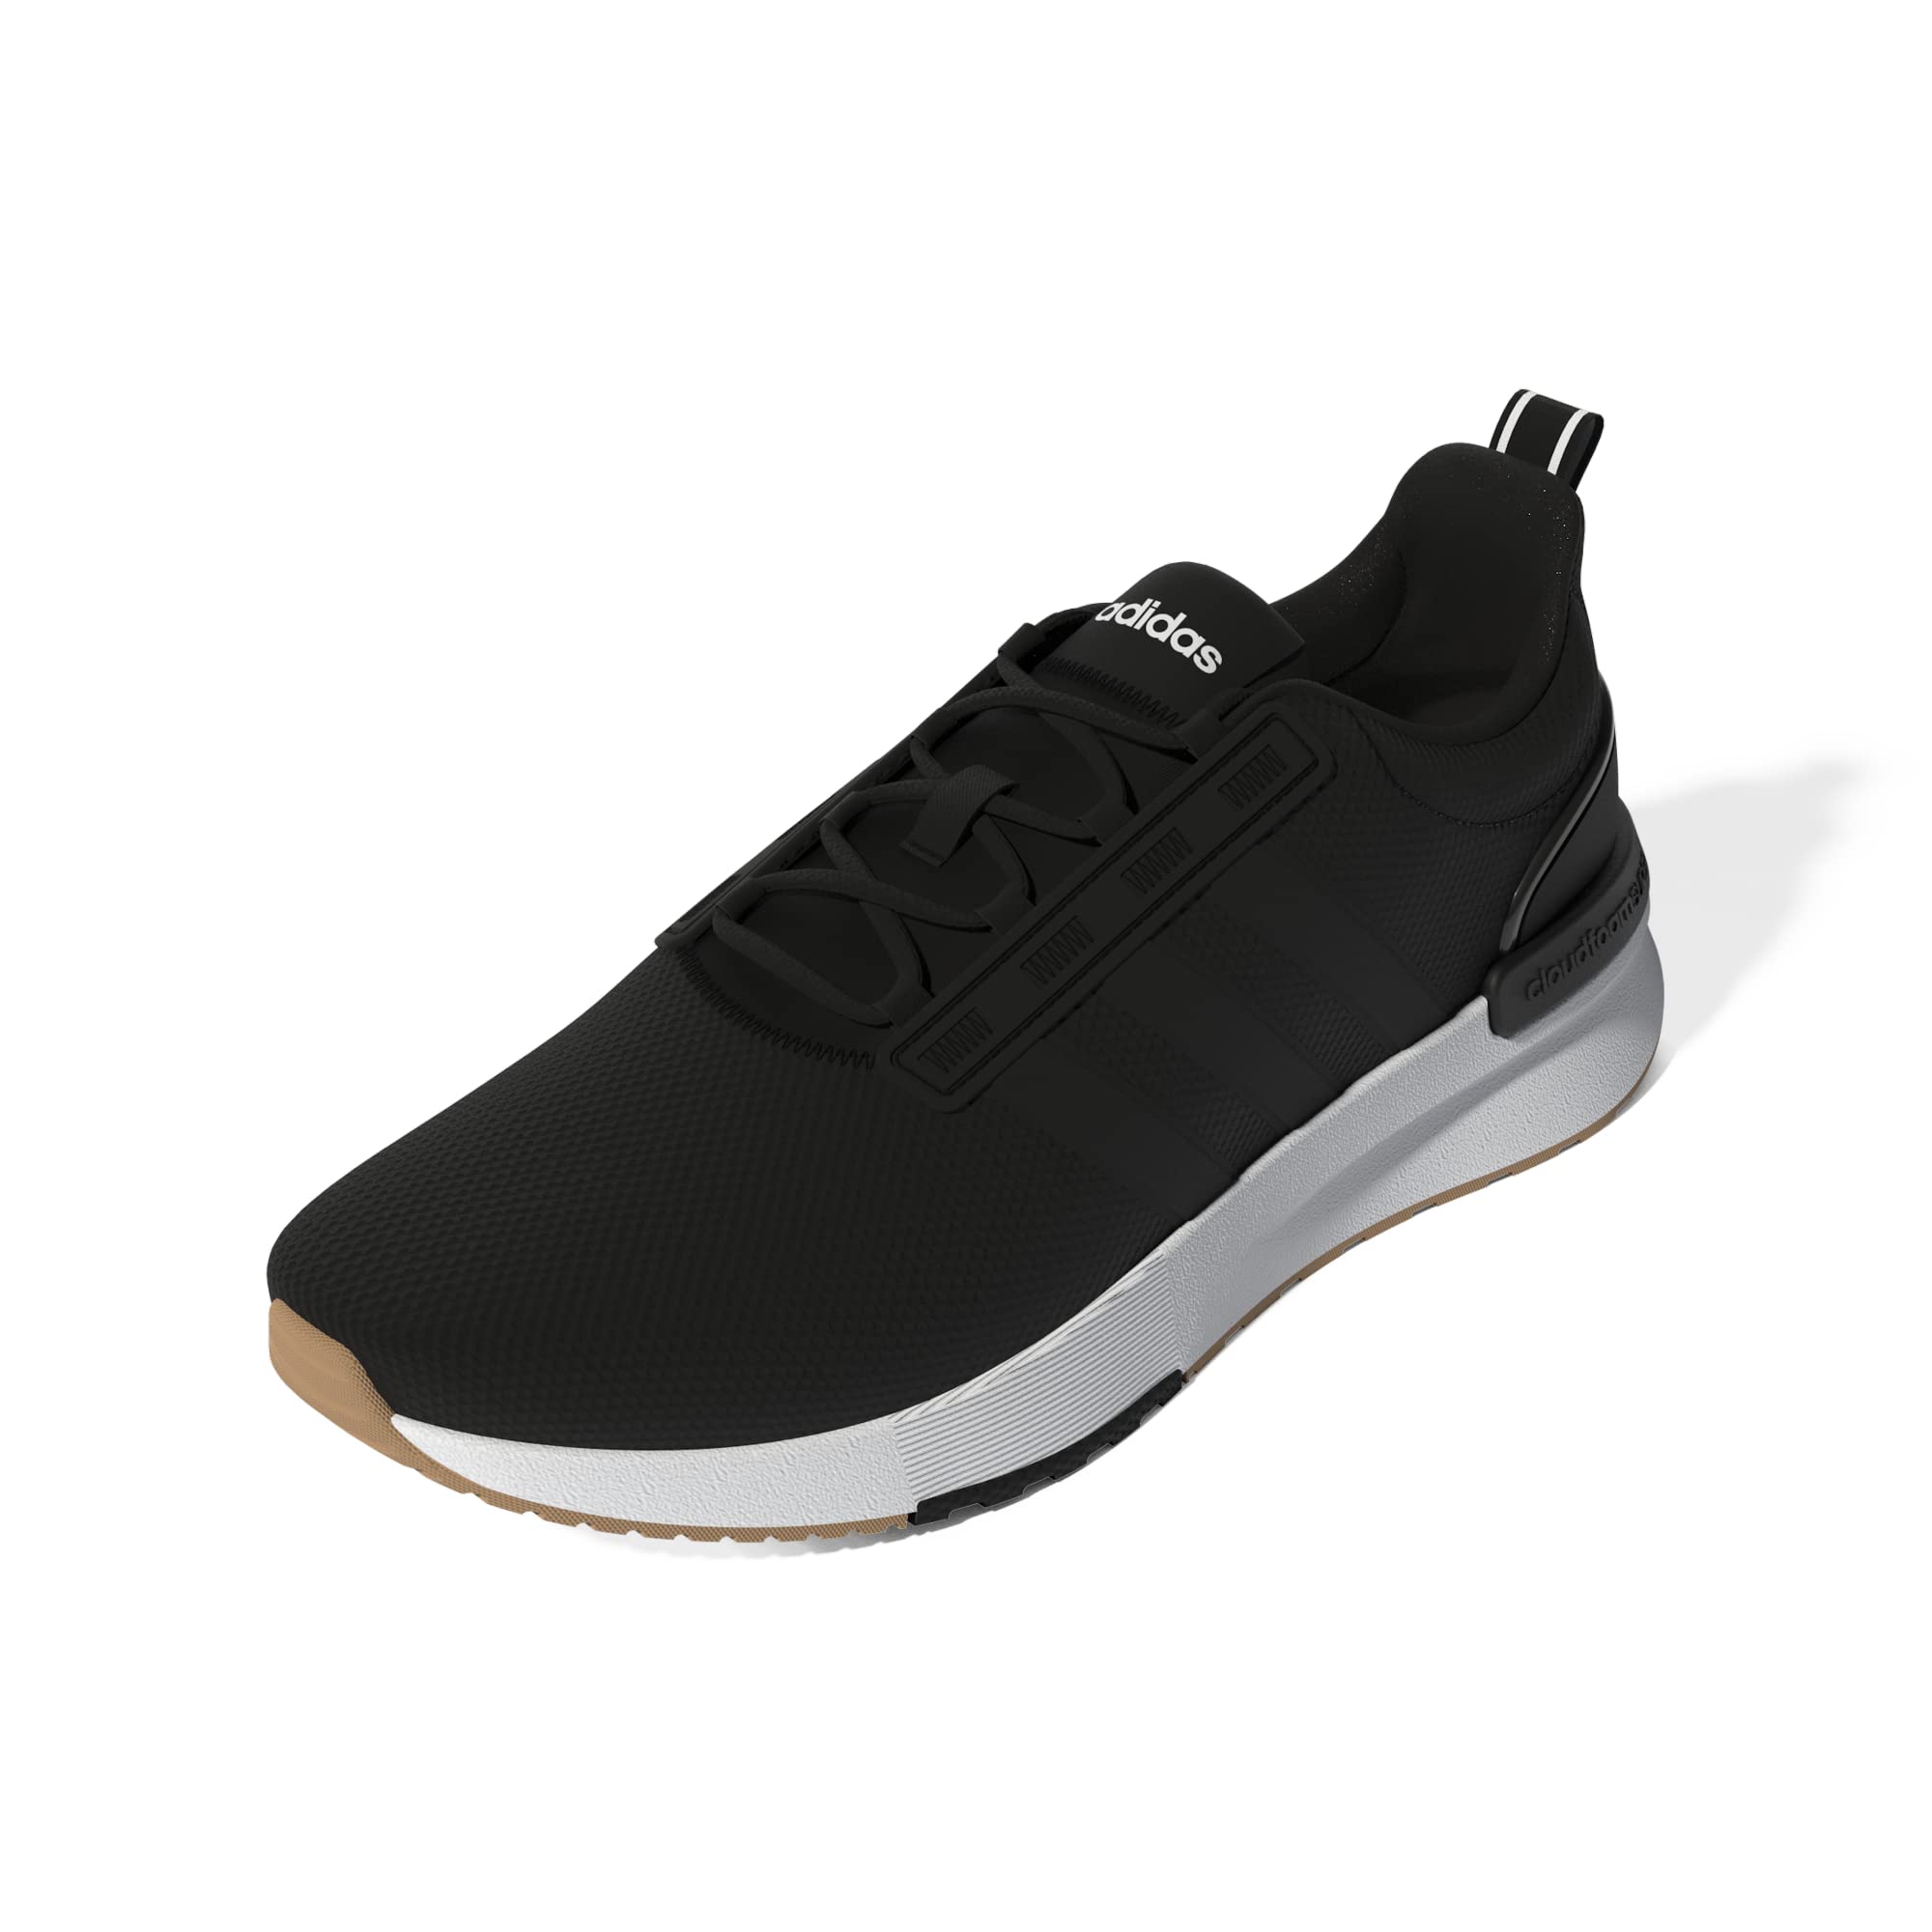 adidas Men's Racer TR21 Running Shoes (Black/Gum) $37.50 + Free Shipping